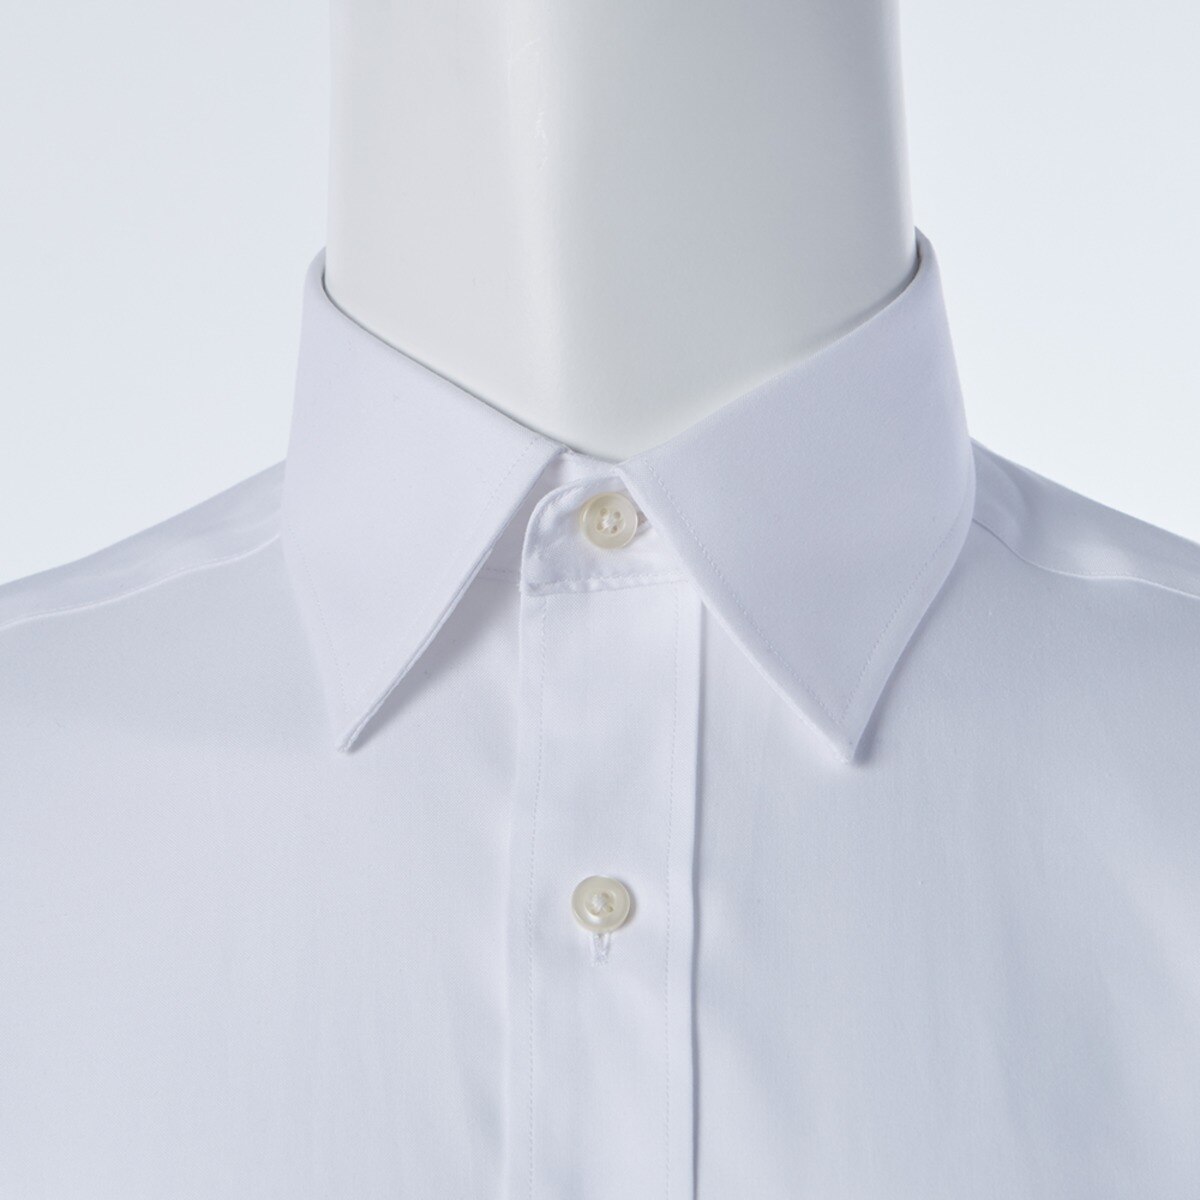 Kirkland Signature 科克蘭 男長袖標準領免燙襯衫 白色 領圍 17吋 X 袖長 34/35吋